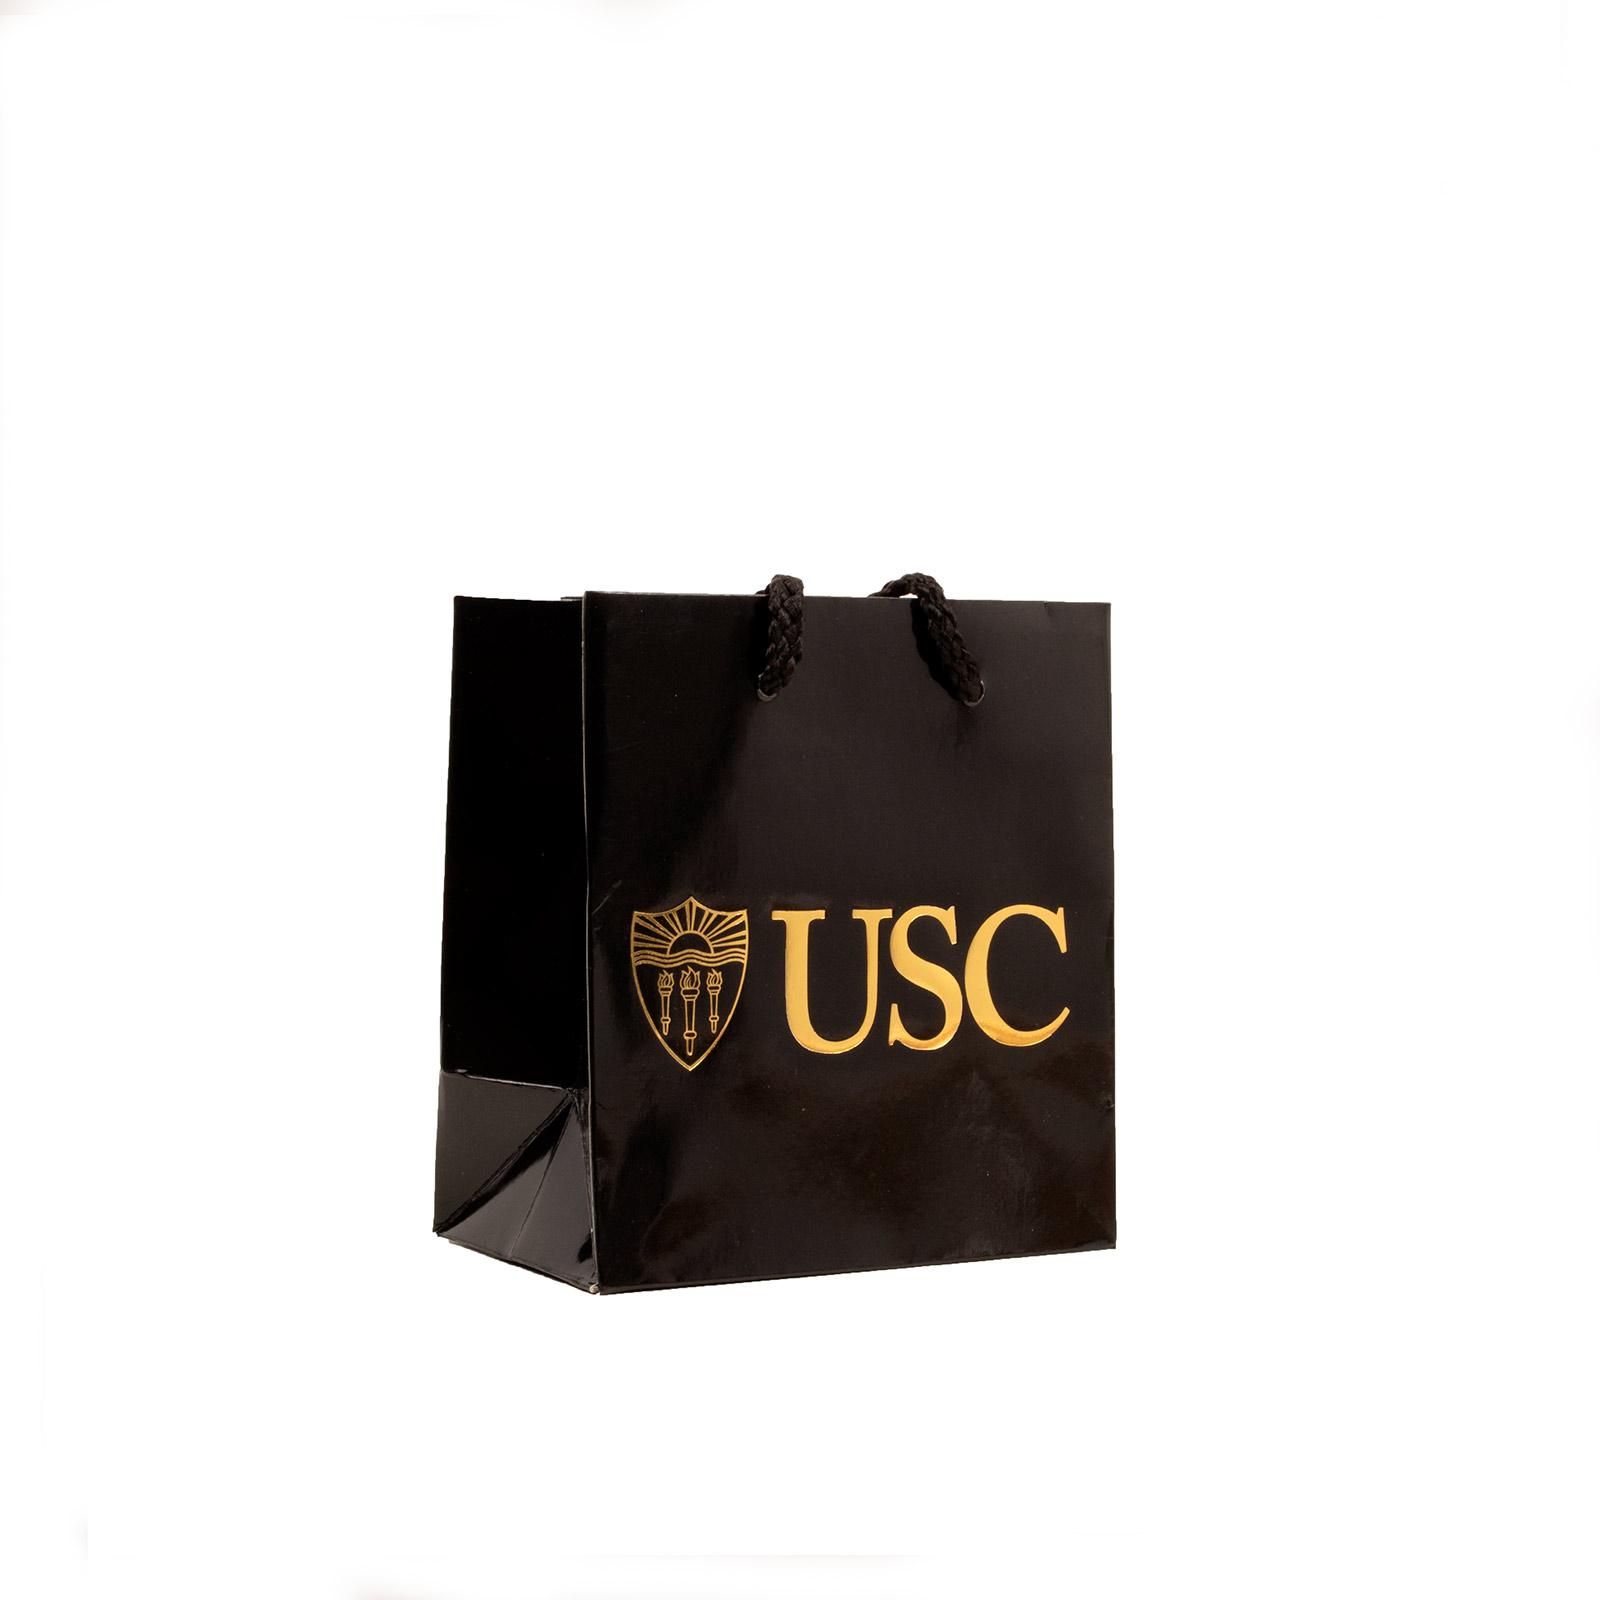 USC Shield Medium Gift Bag Black image01